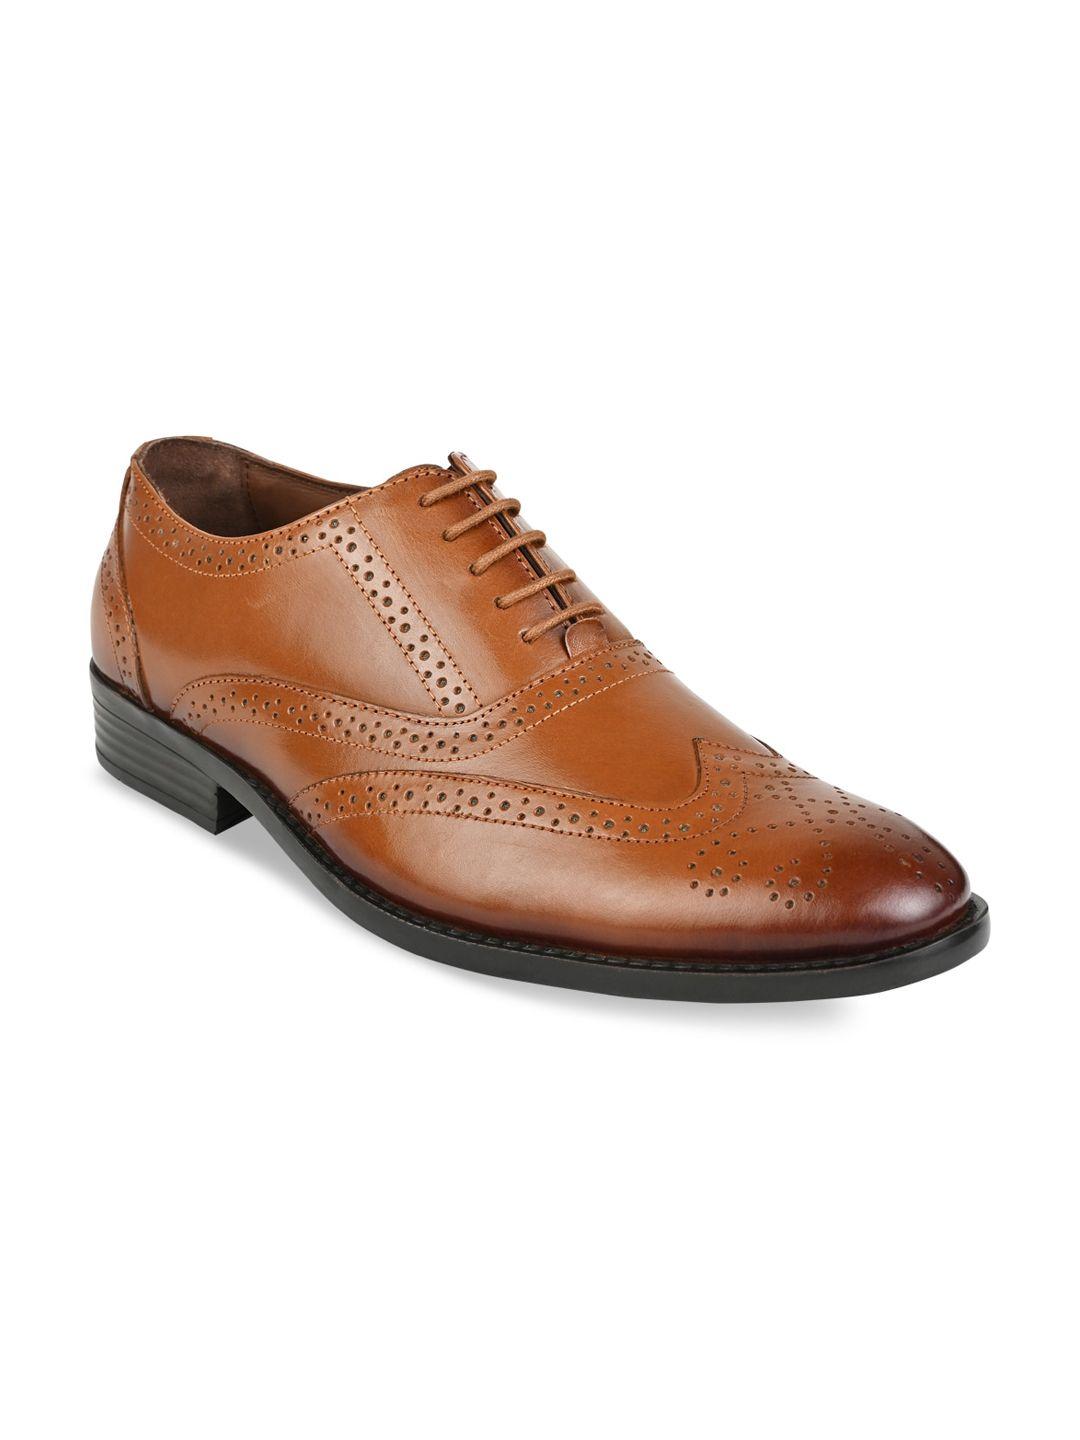 regal-men-tan-formal-leather-brogues-shoes